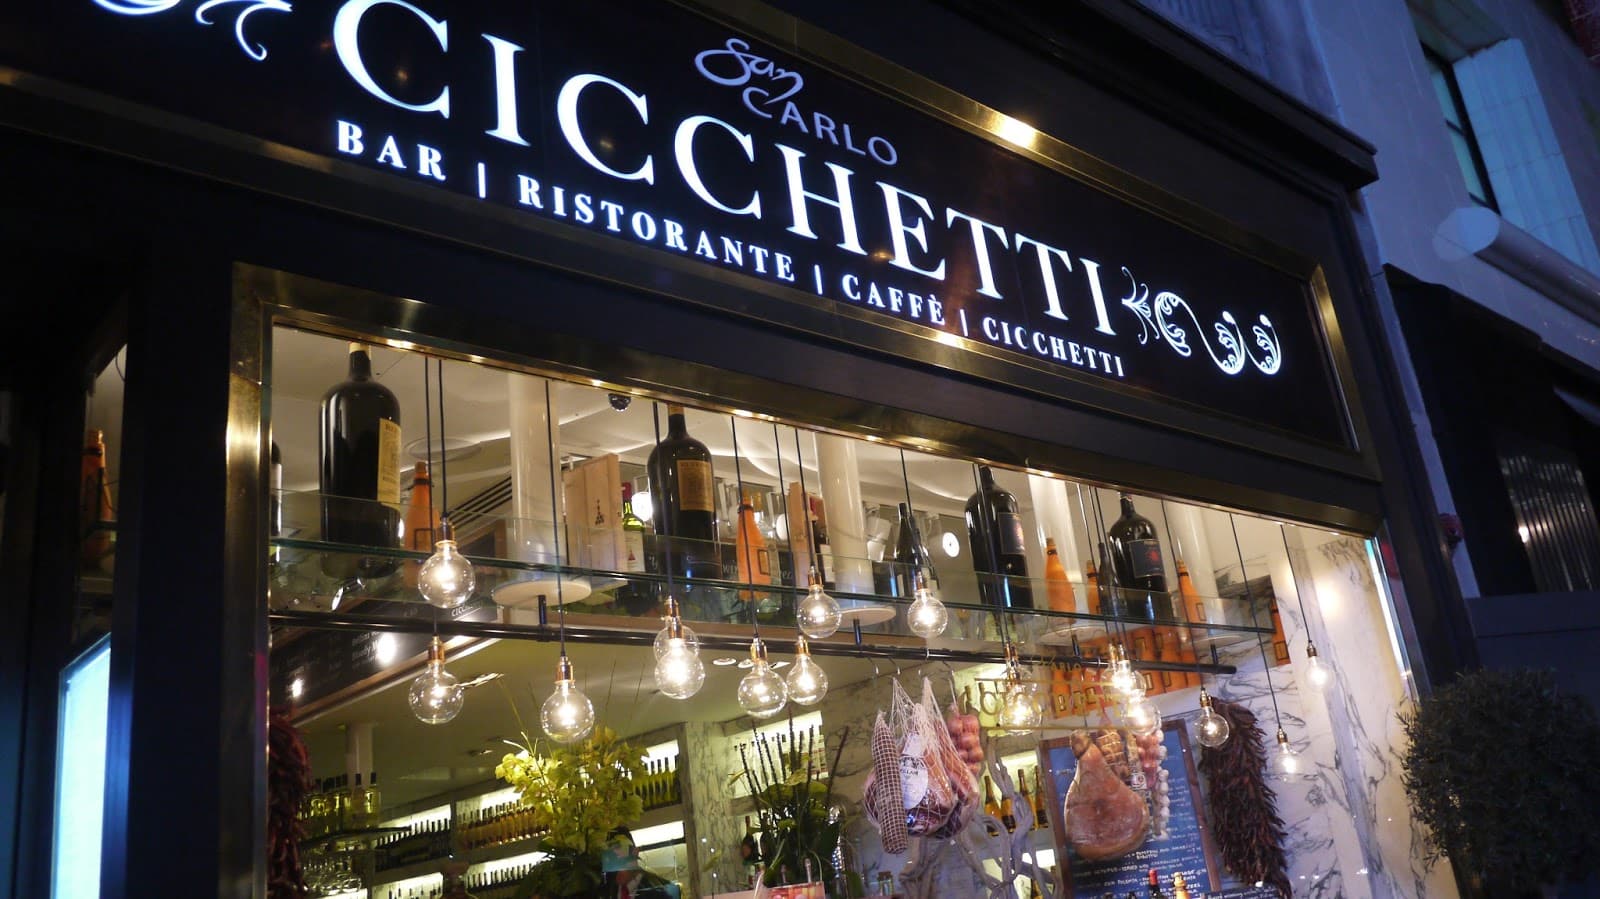 San Carlo Cicchetti, Piccadilly.